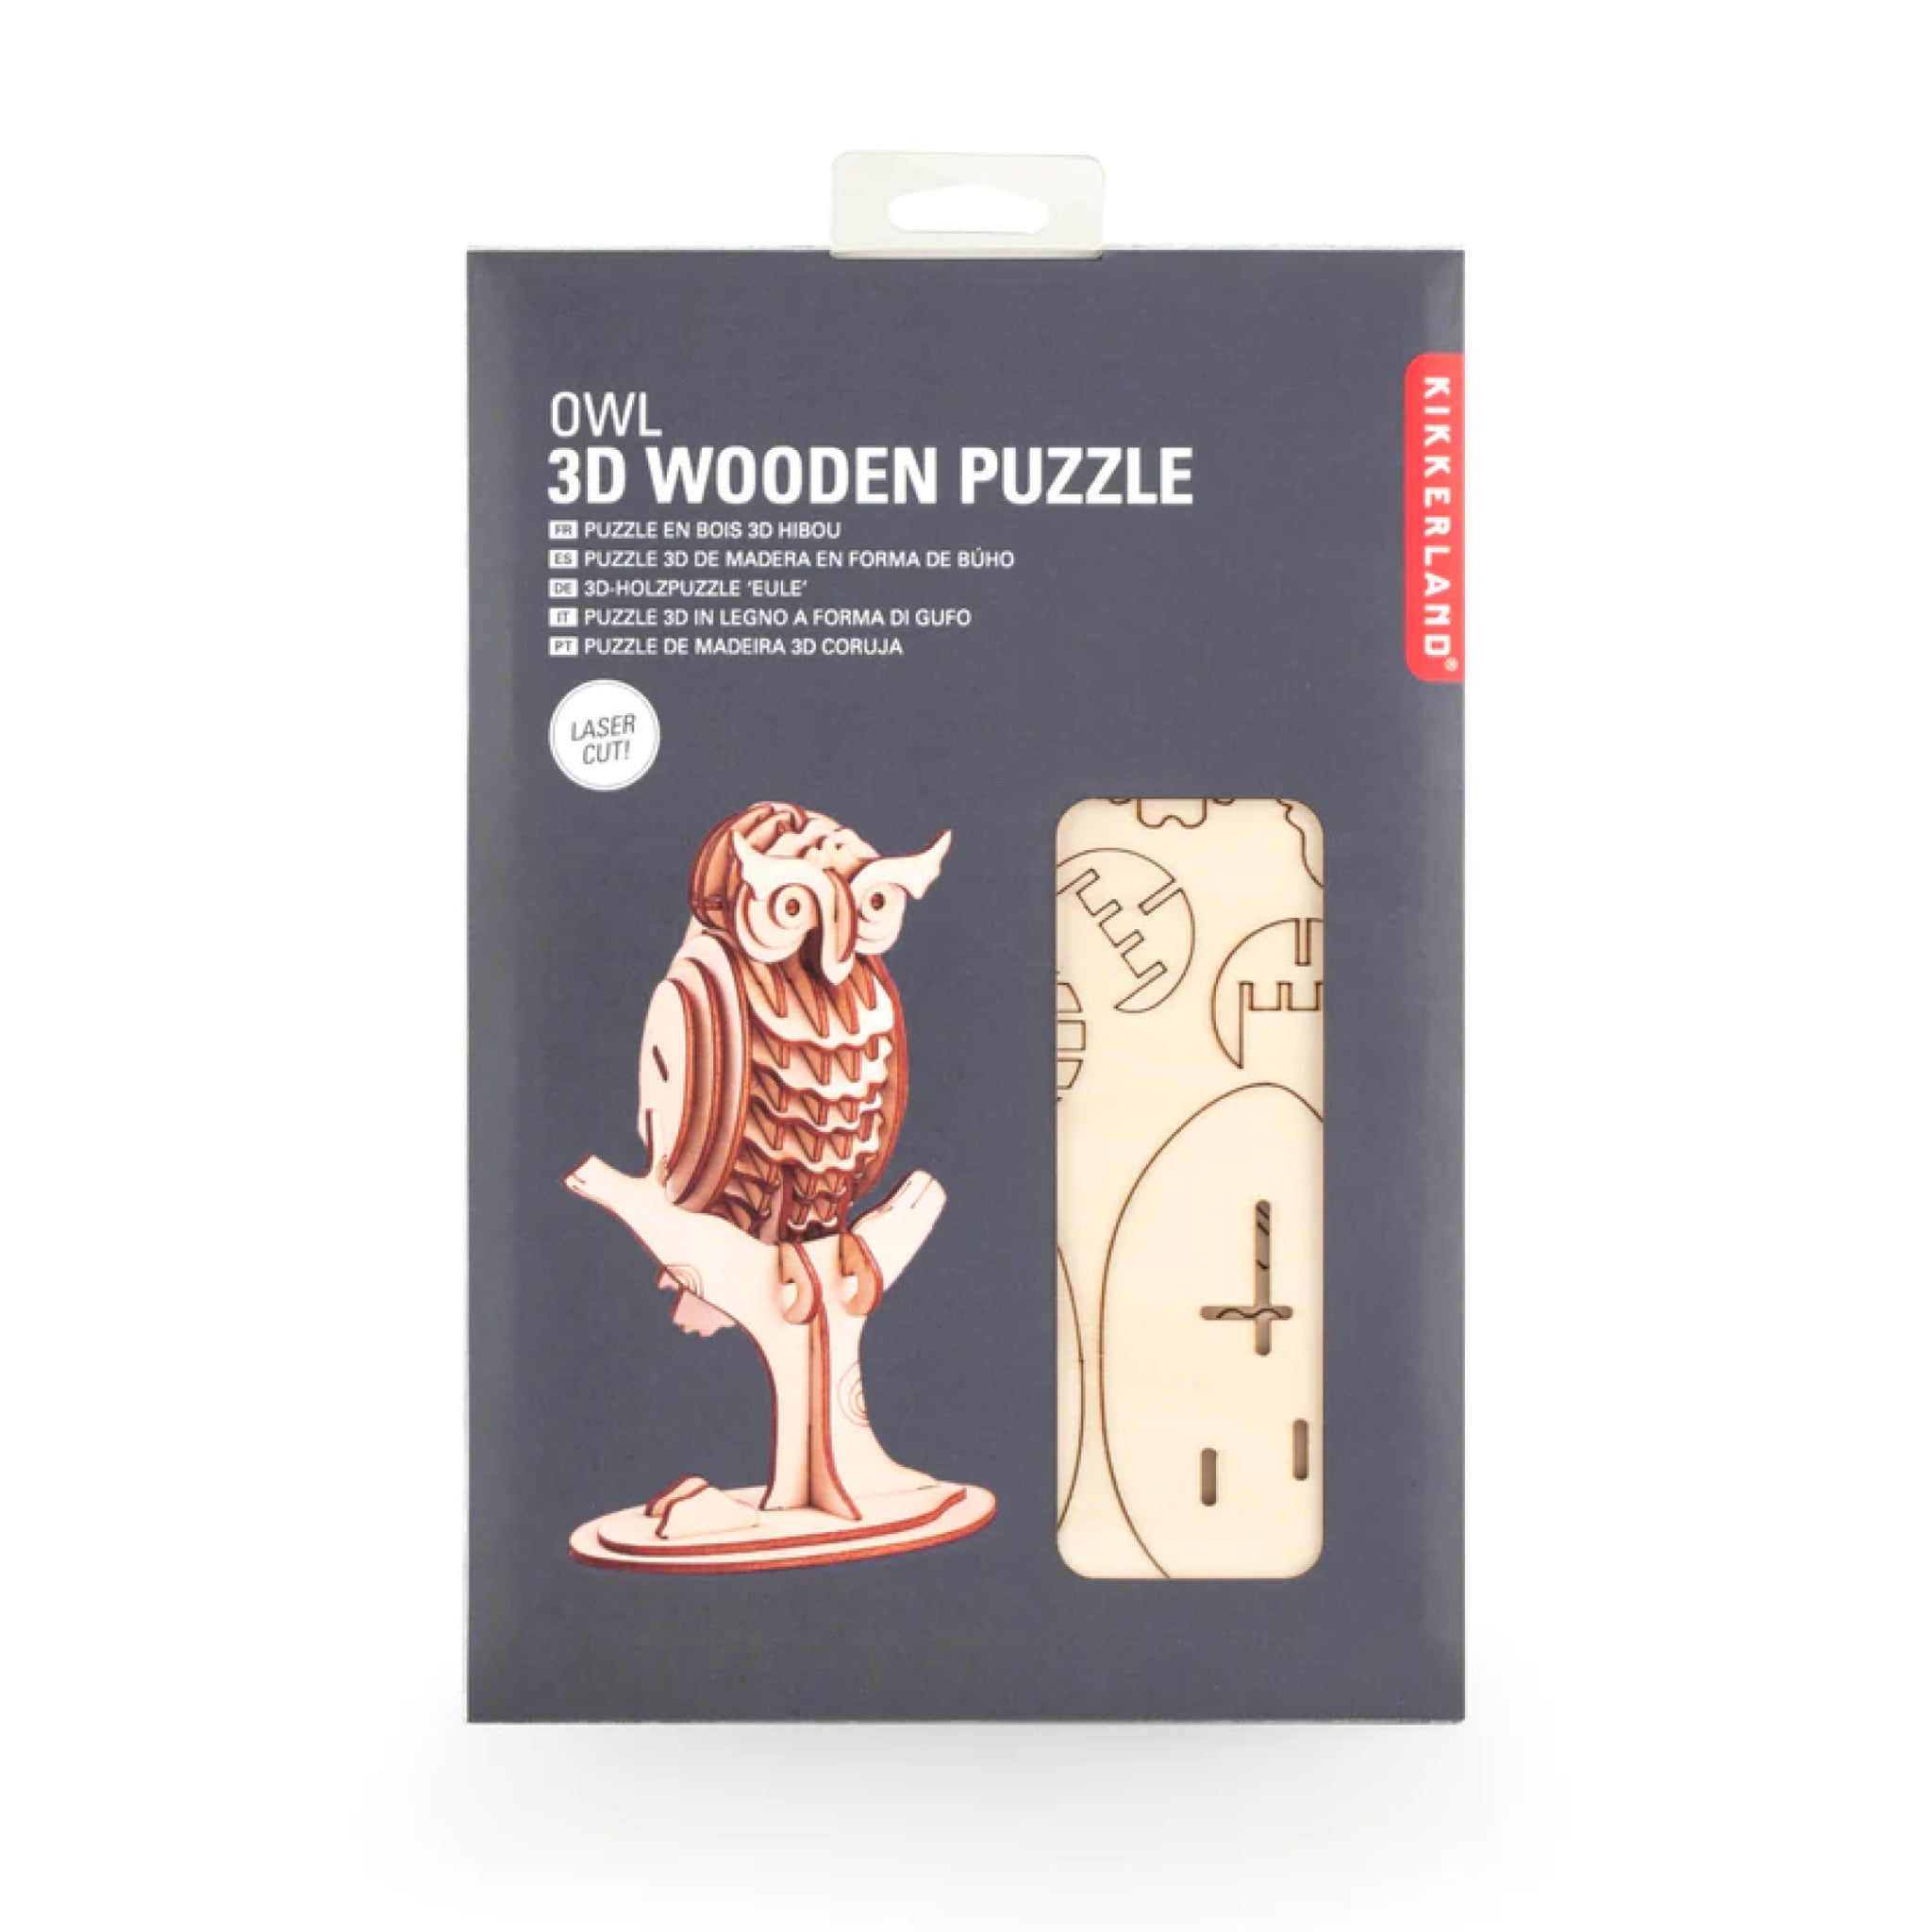 Owl 3D Wooden Puzzle - Wynwood Walls Shop